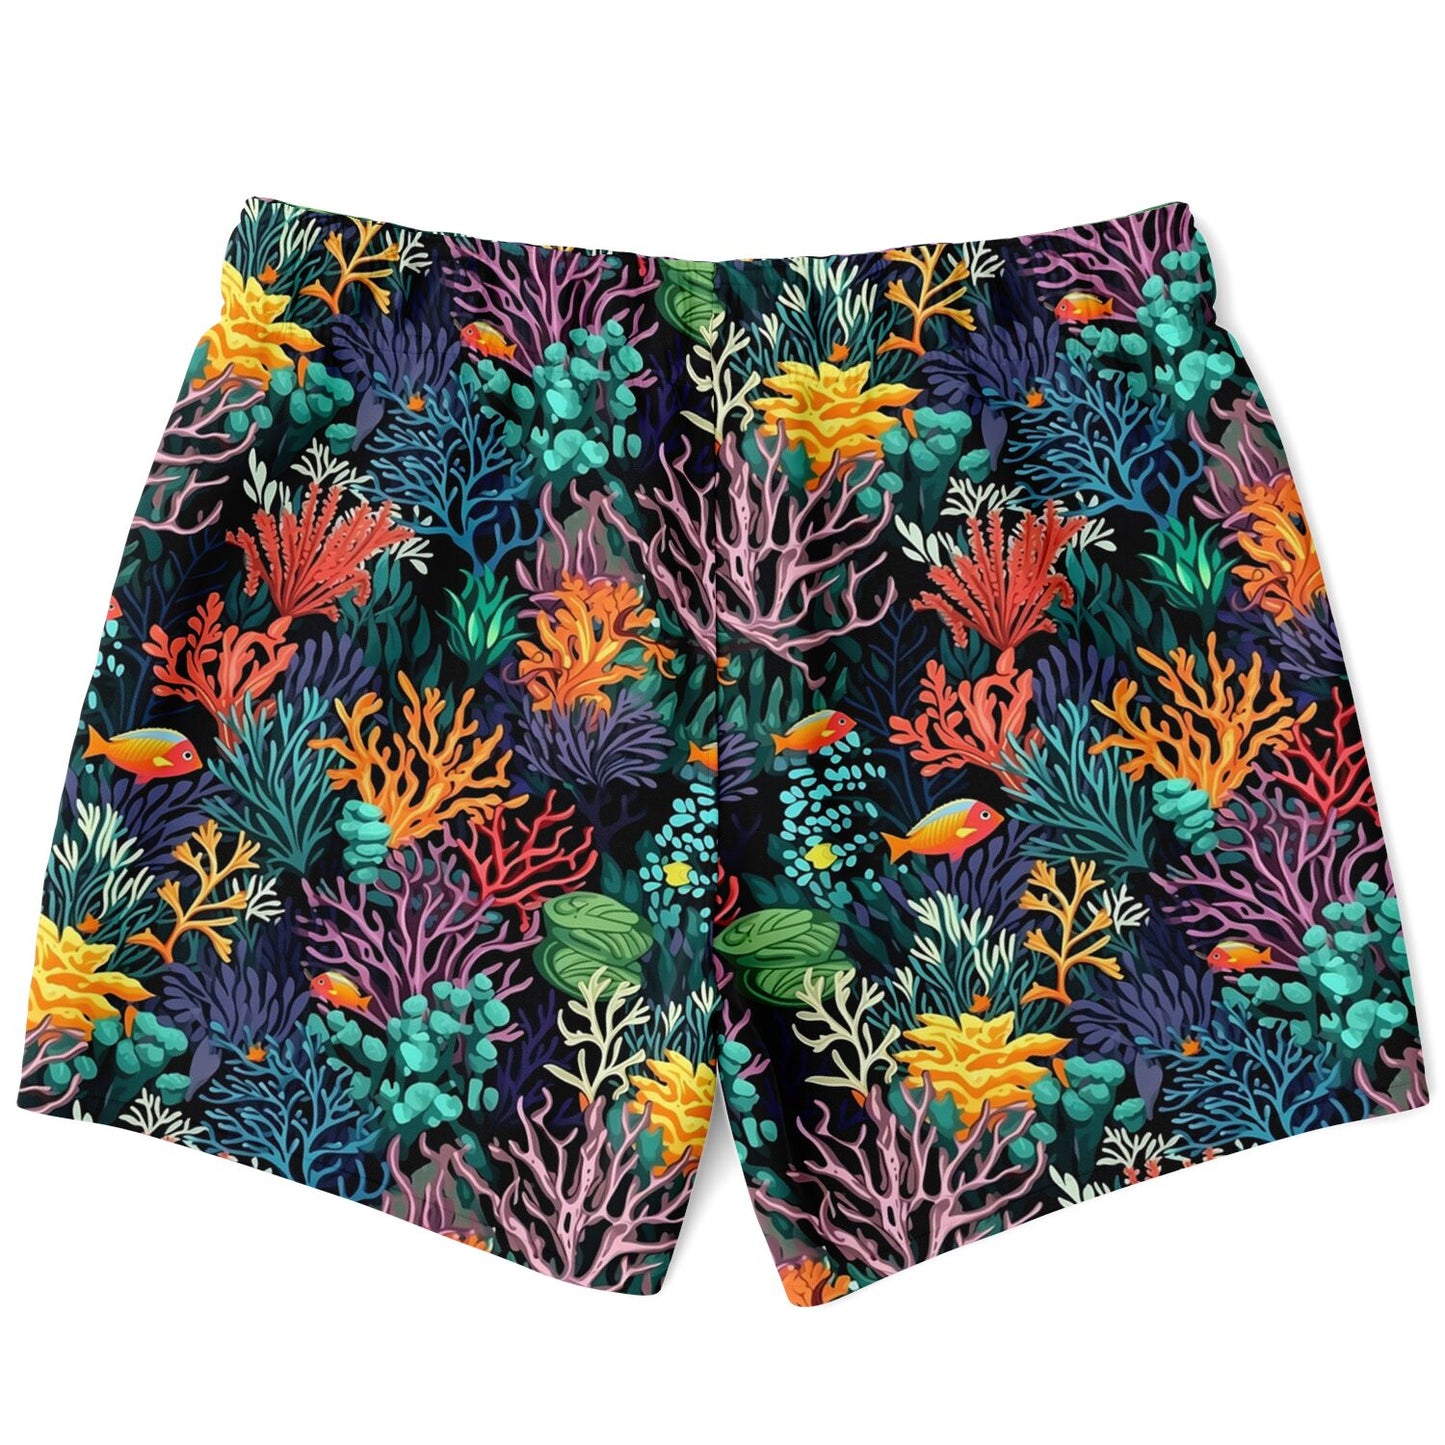 Coral Reef Men Swim Trunks, Sea Ocean Tropical Mid Length Shorts Beach Surf Swimwear Front Pockets Mesh Lining Drawstring Bathing Suit Starcove Fashion